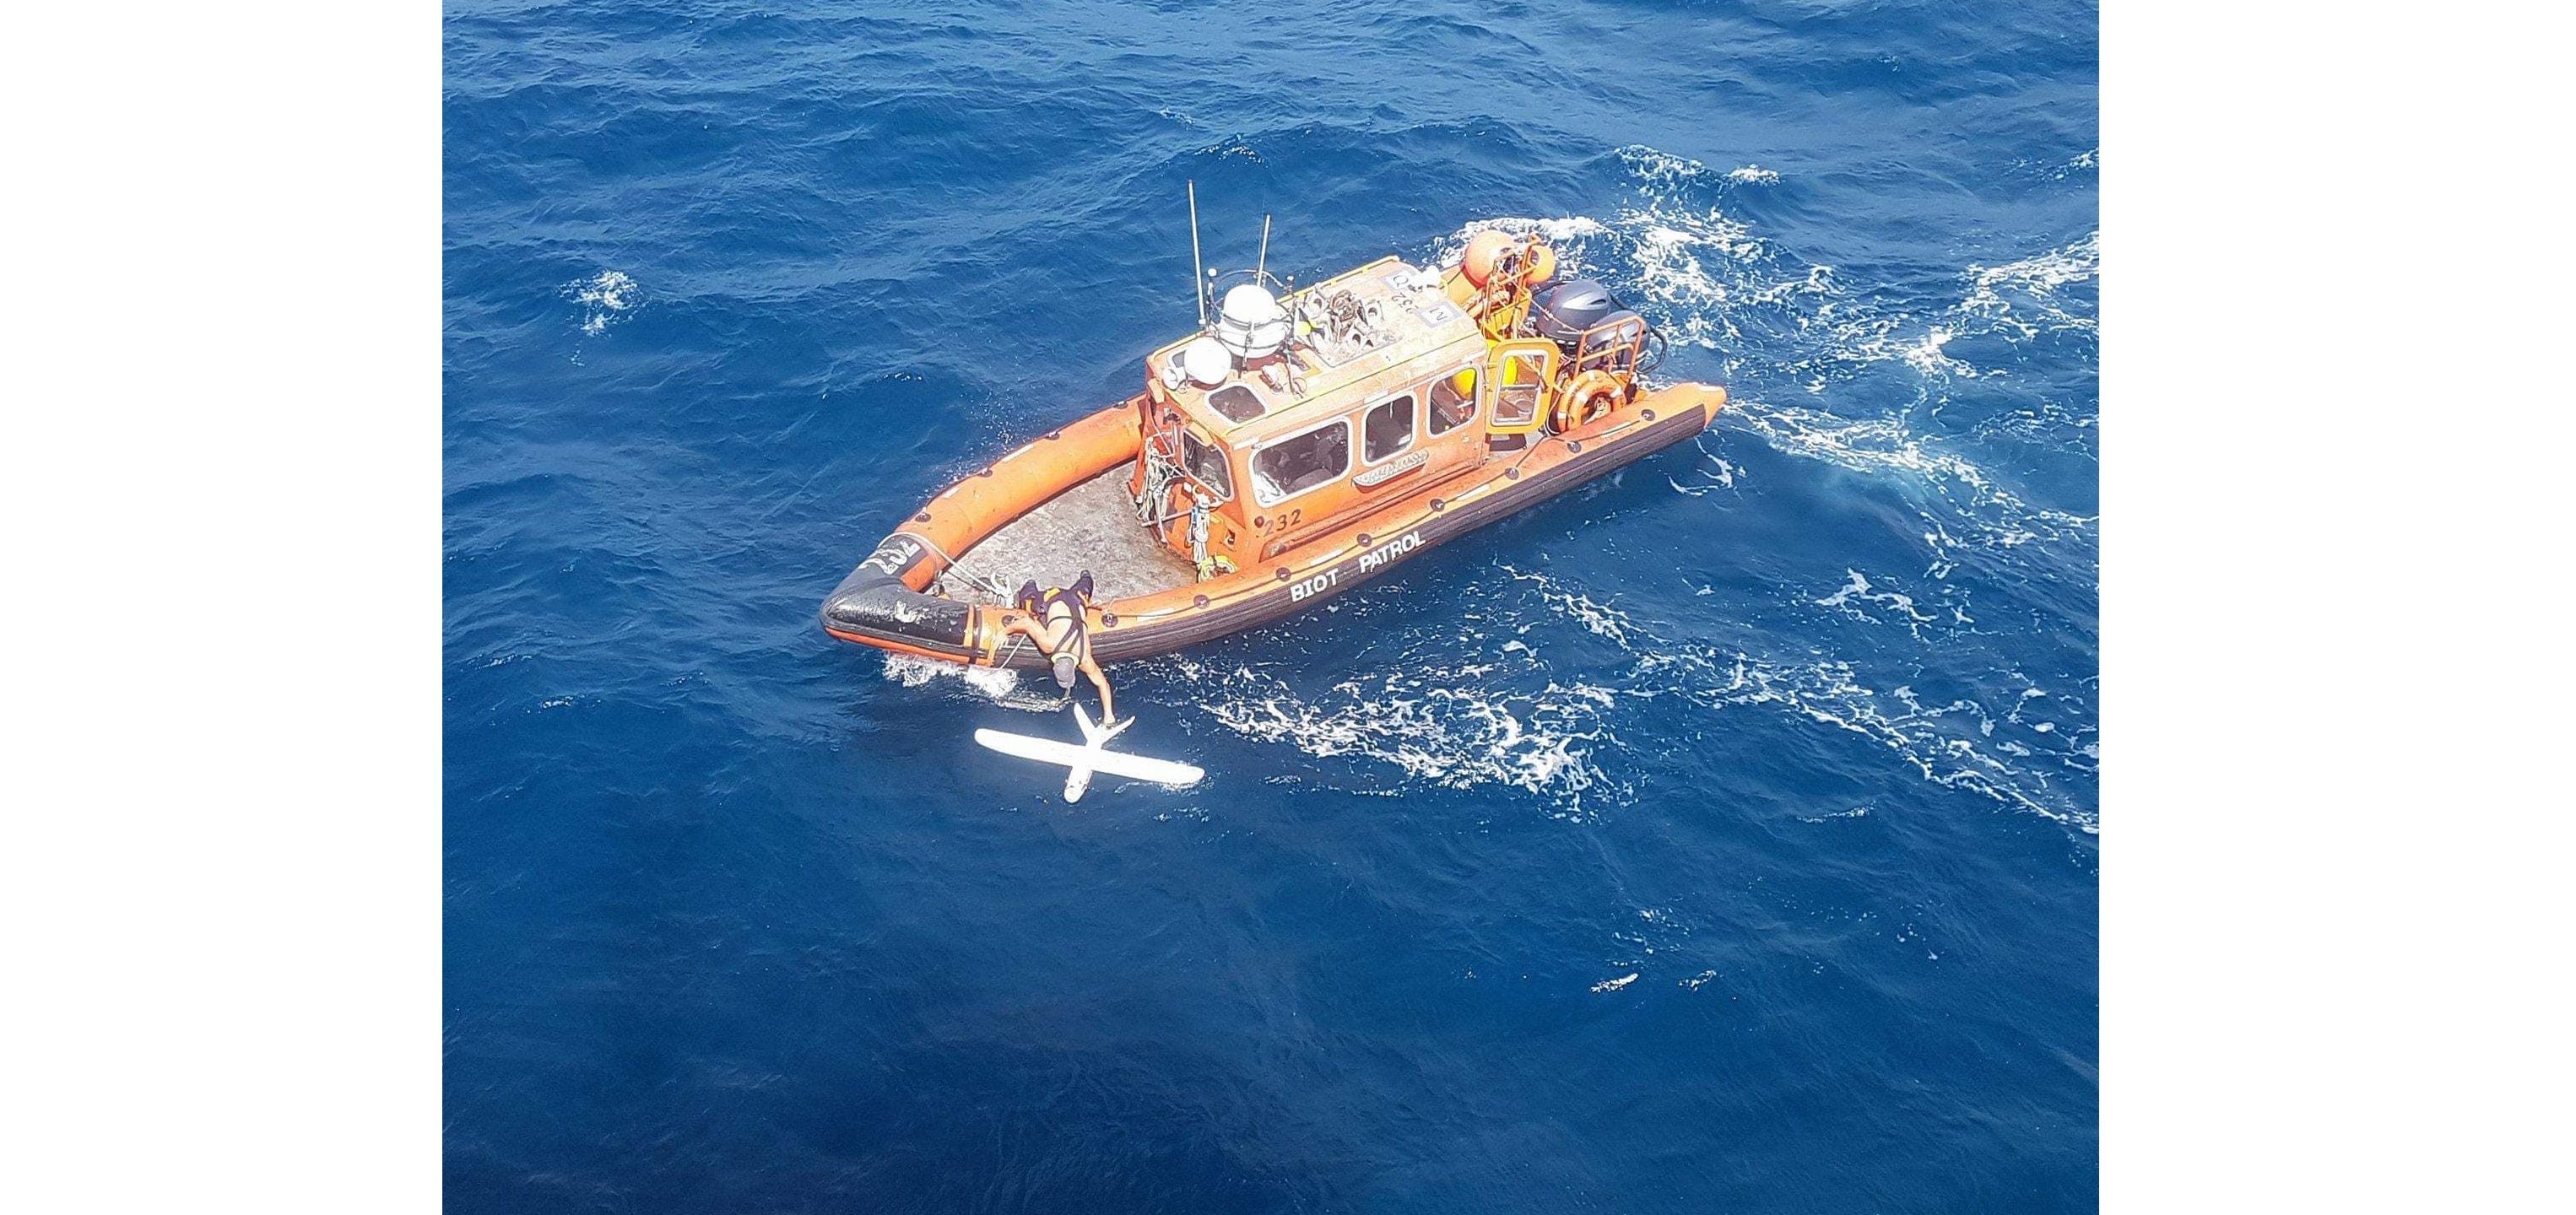 Patrol boat and drone in British Indian Ocean Territory

